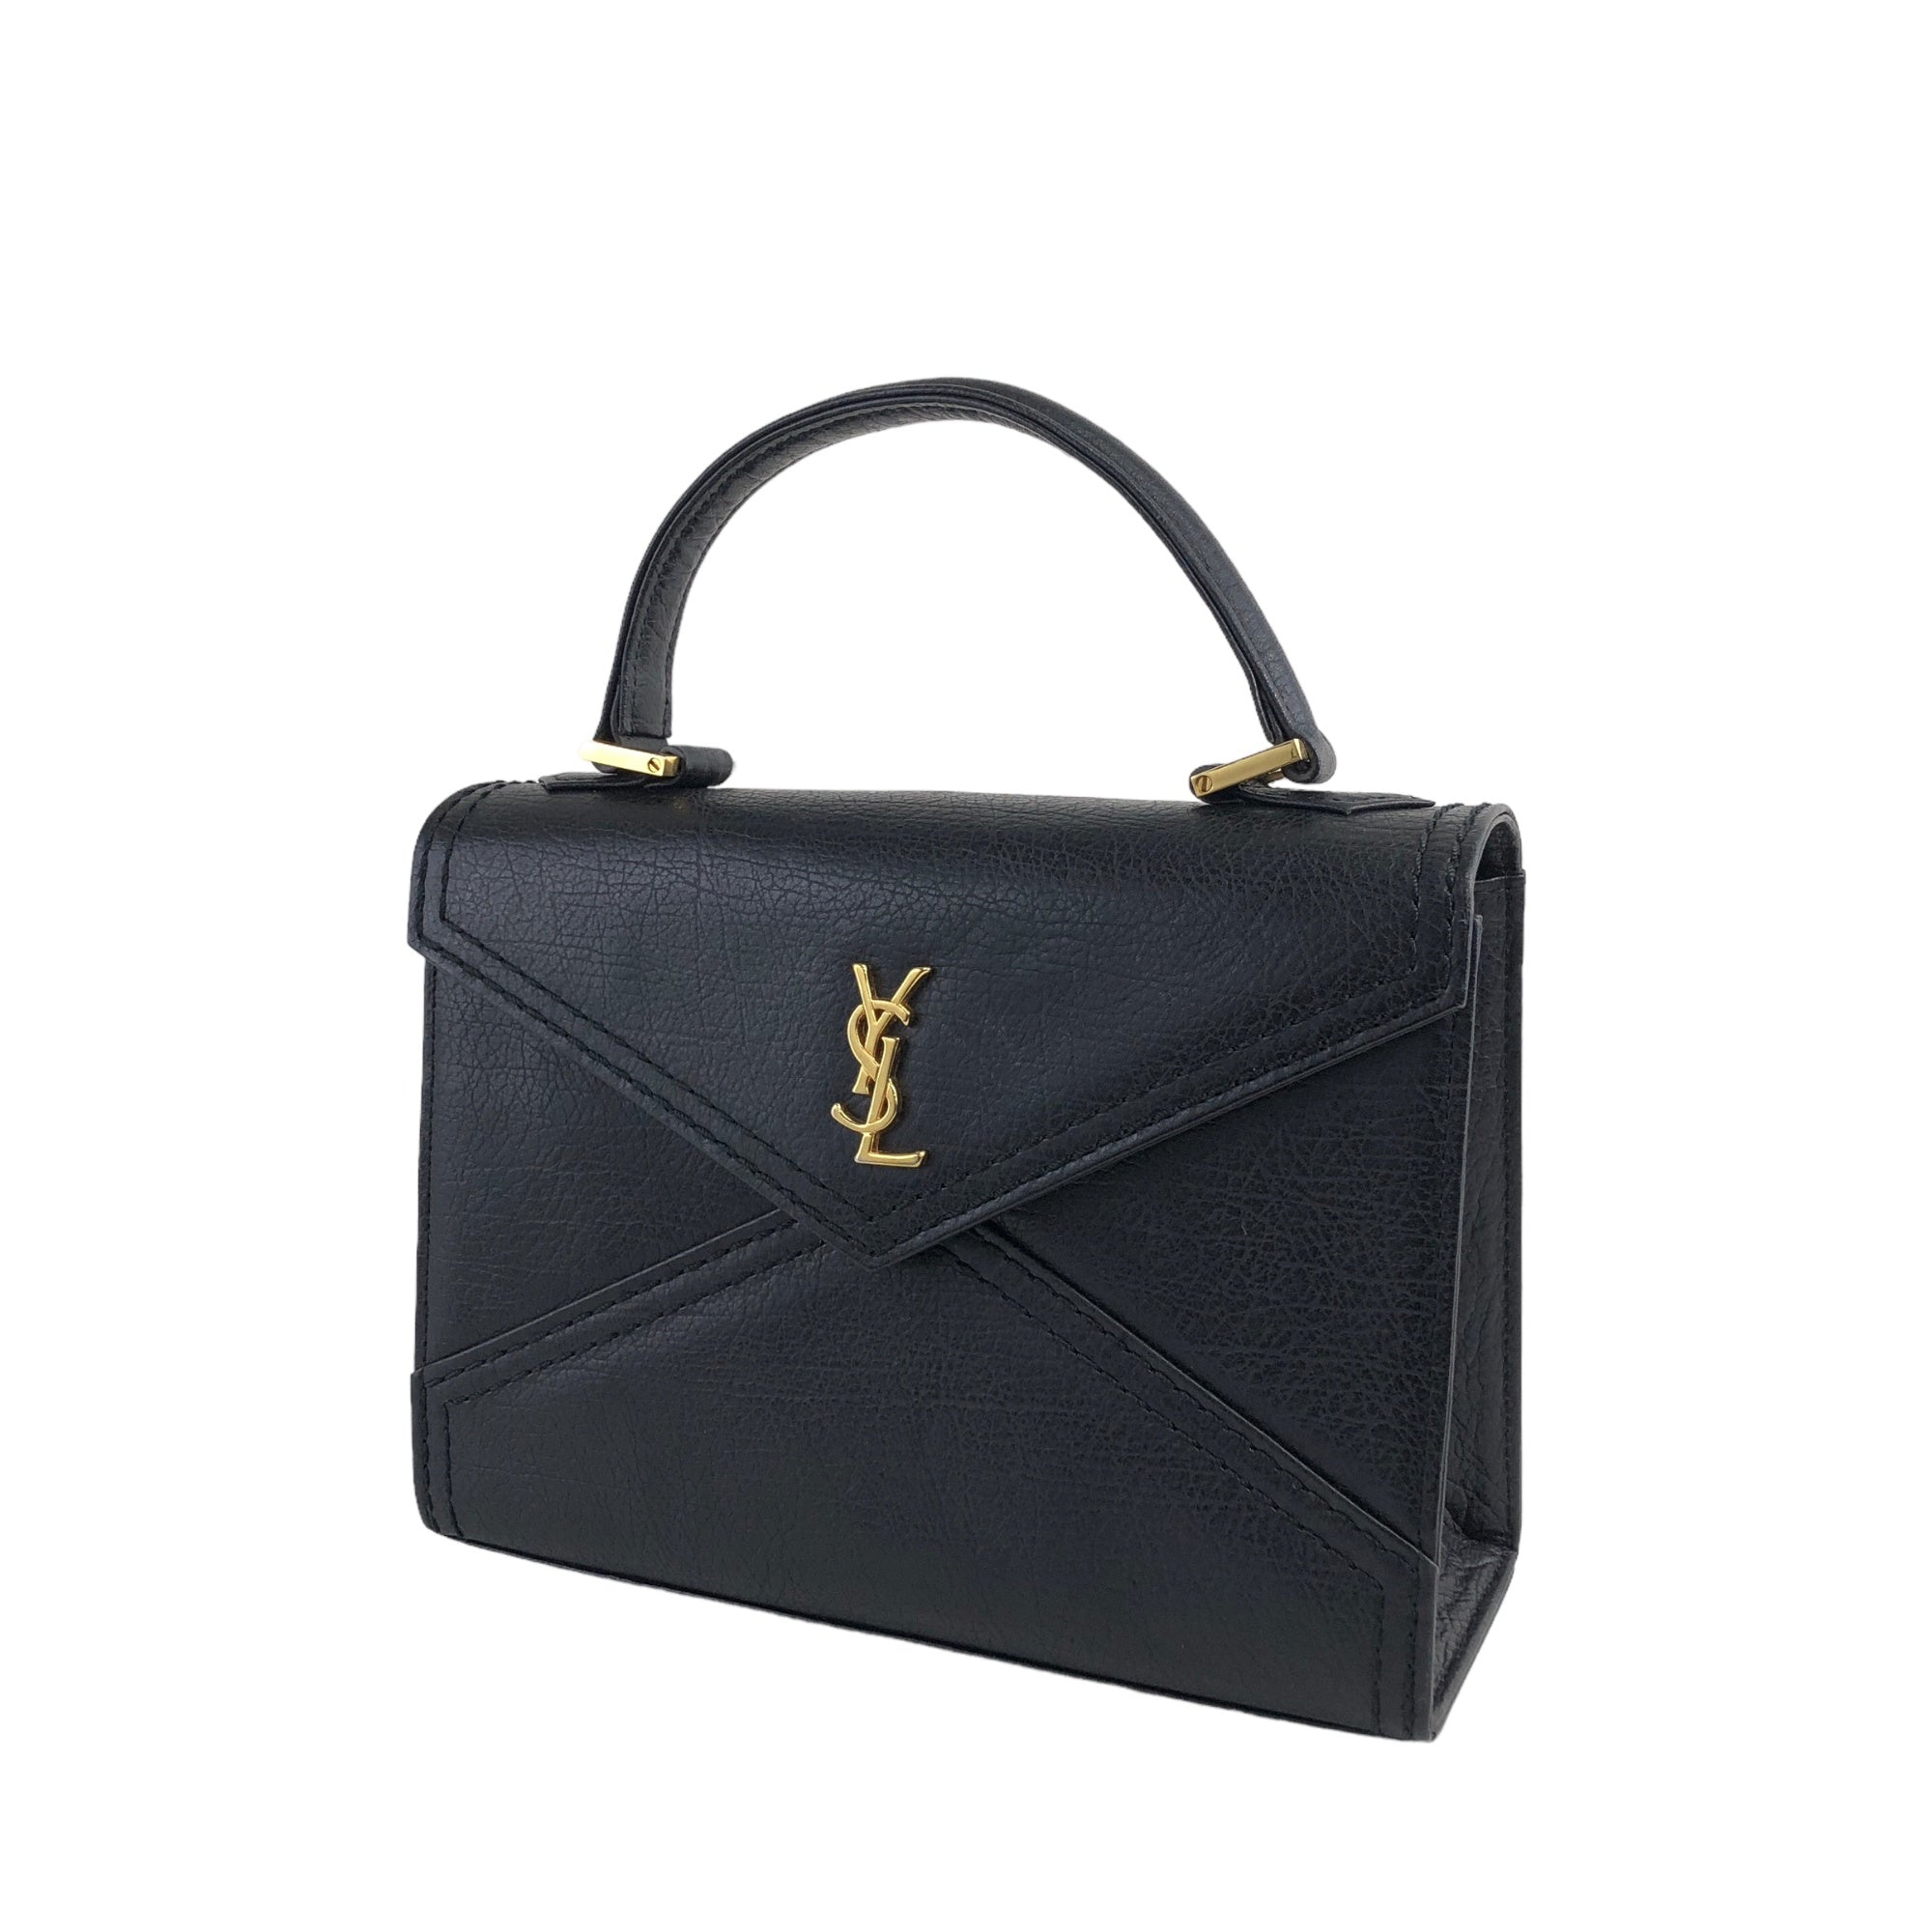 YSL leather ladies handbag | Handbag, Women handbags, Leather